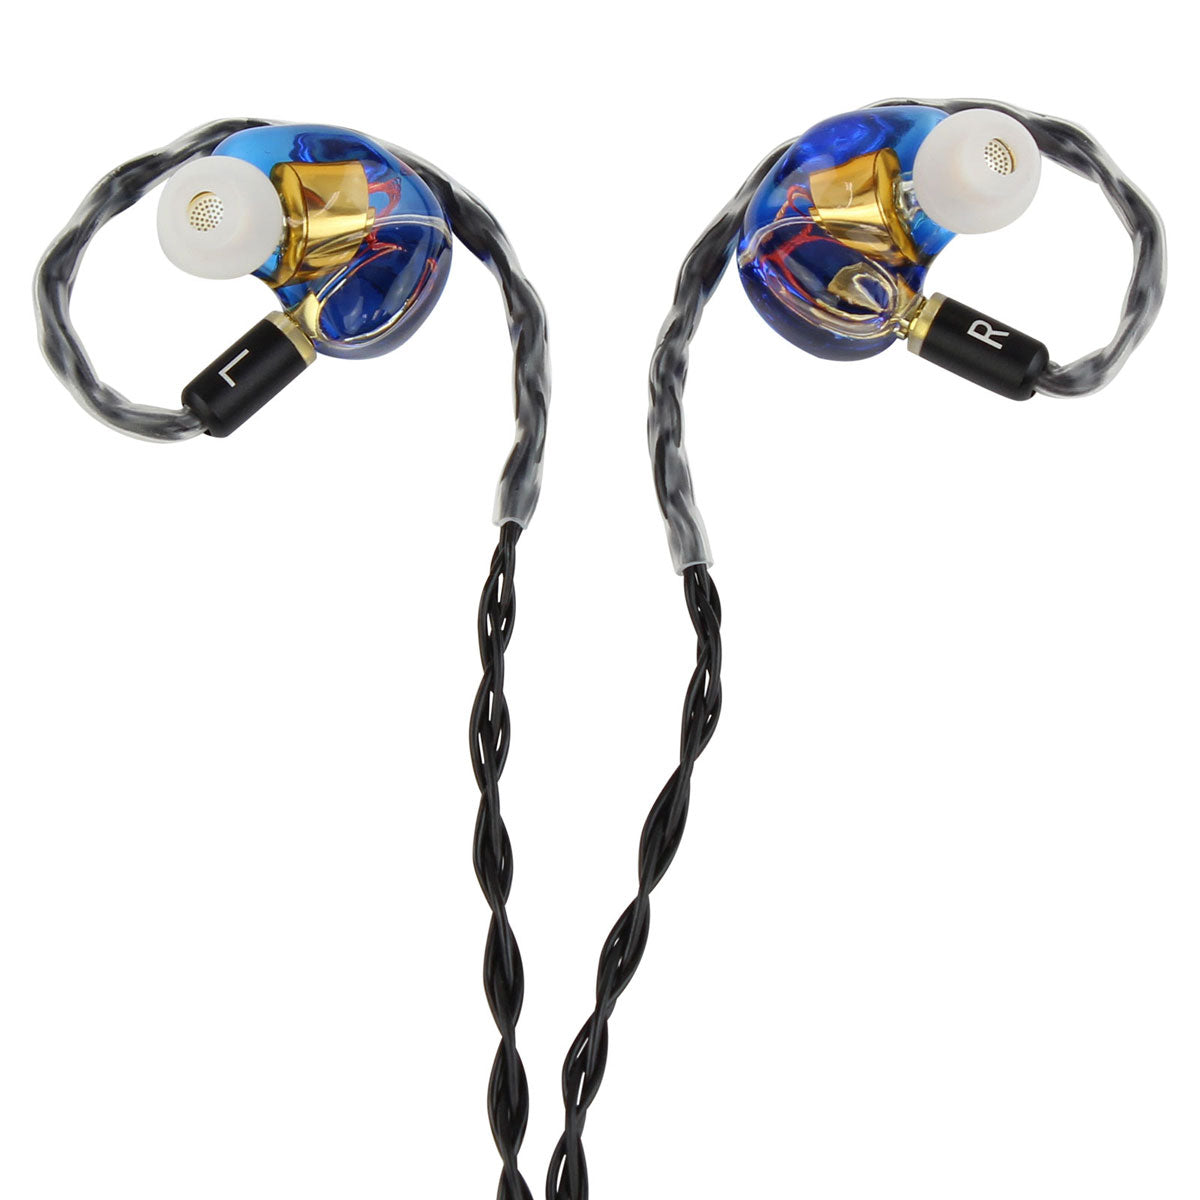 Blastking EARBUDS-8017-BLUE Professional In-Ear Monitors - Translucent Blue